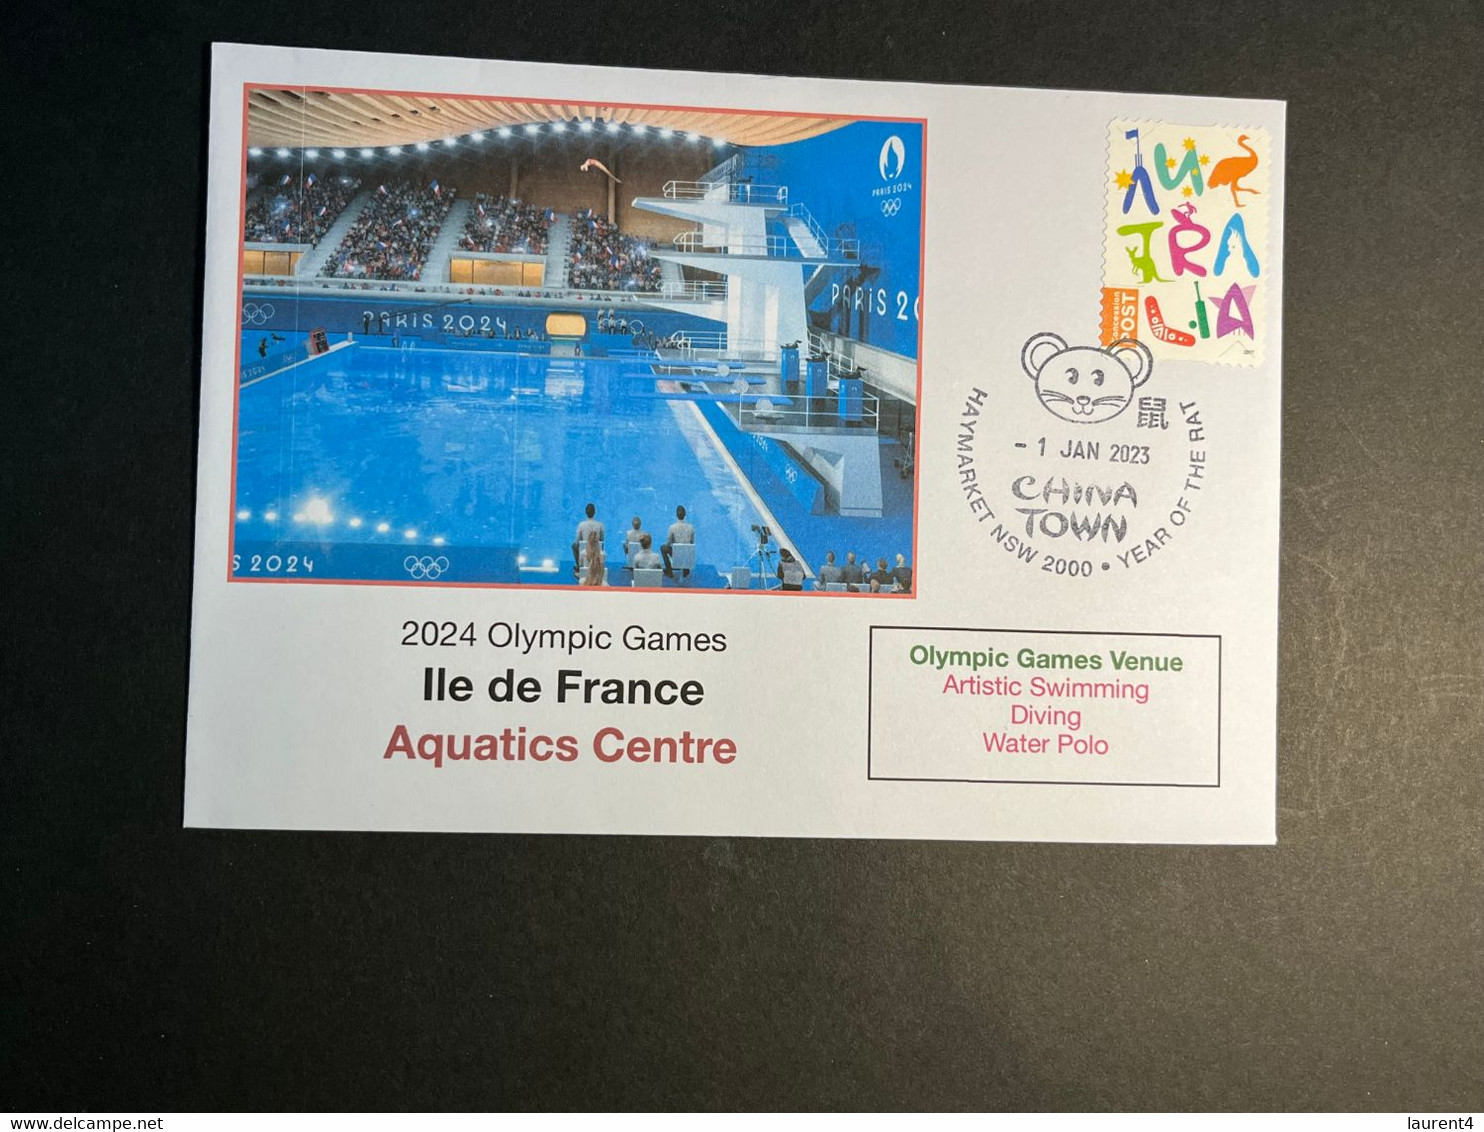 (3 N 2) 2024 France - Paris Olympic Games (1-1-2023) Location - Ile De France - Aquatic Centre (Swimming Diving W.Polo) - Estate 2024 : Parigi